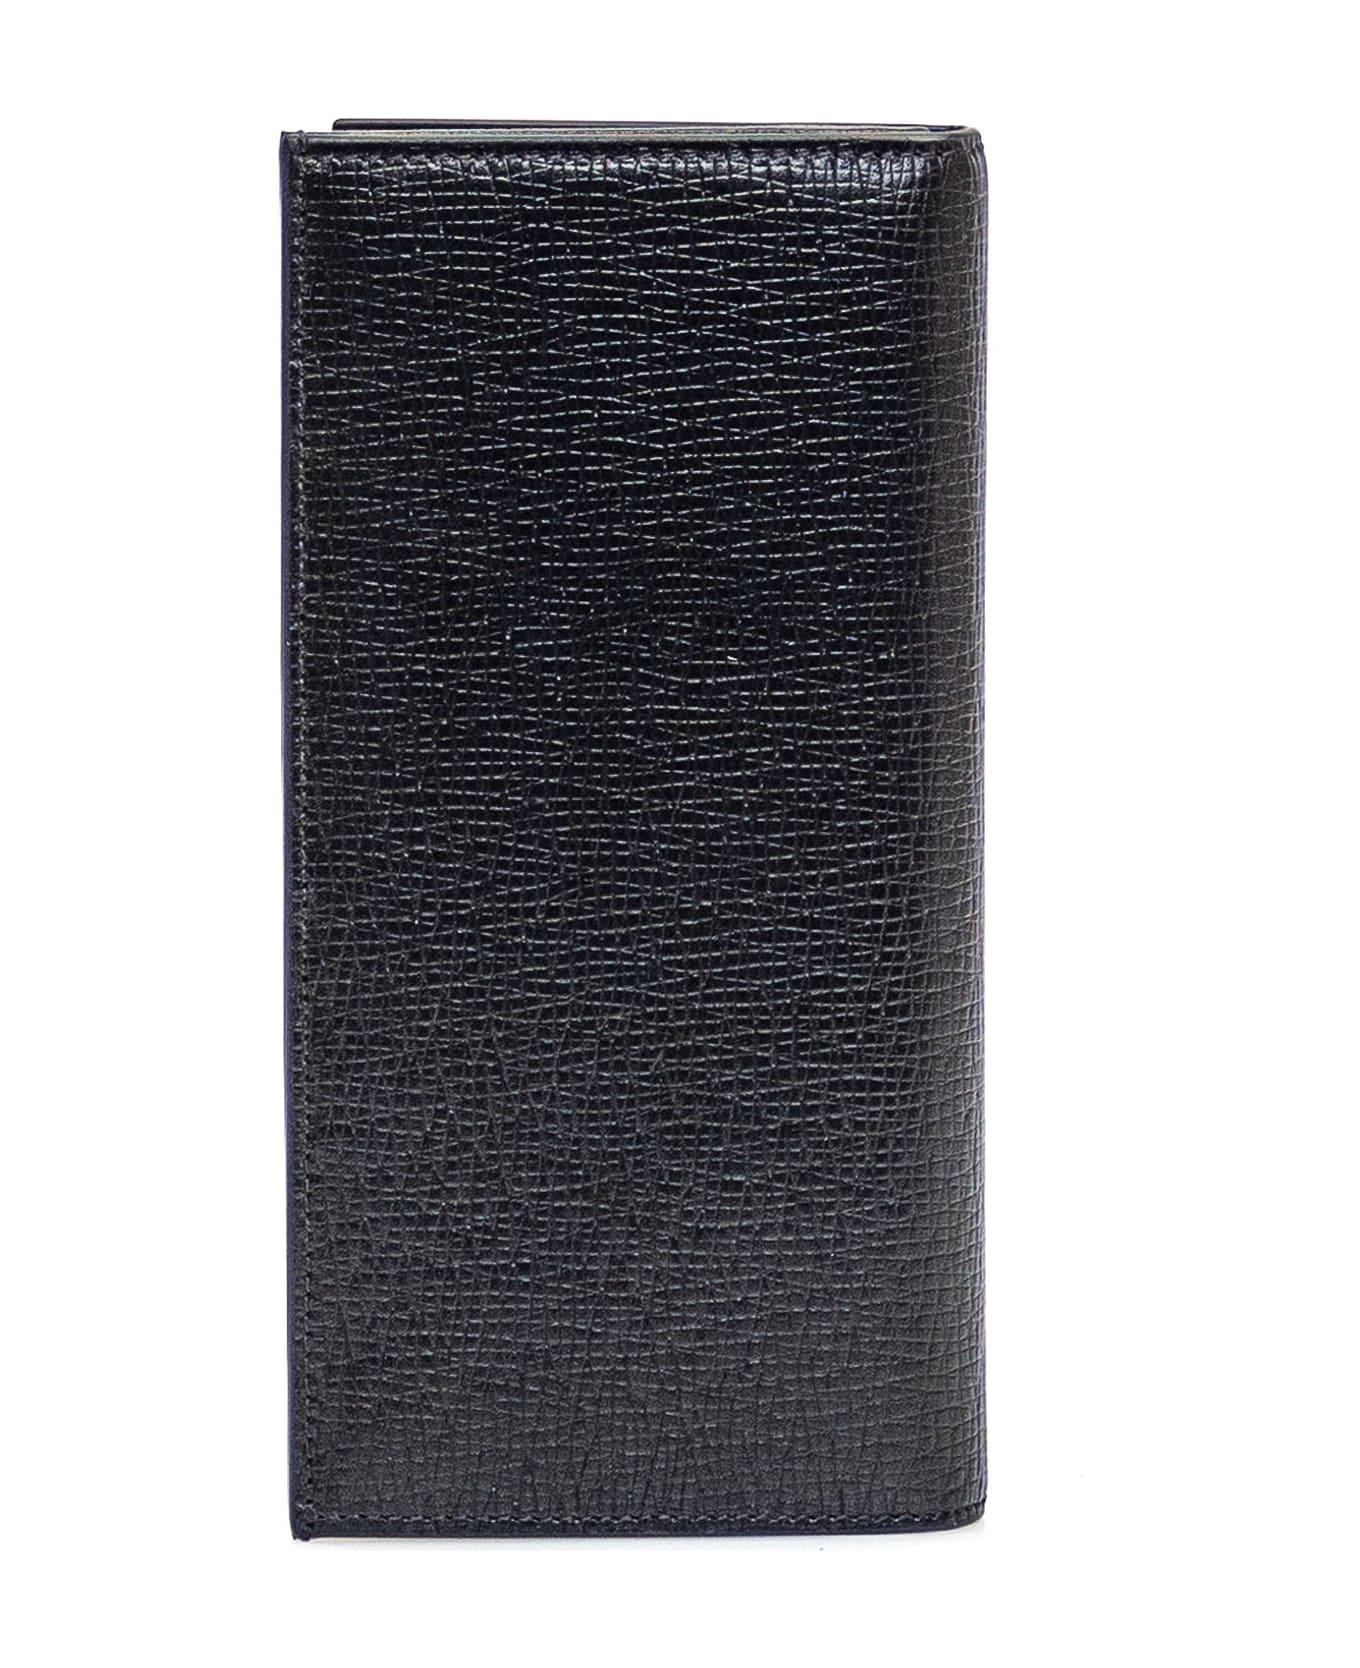 Ferragamo Leather Wallet - NERO